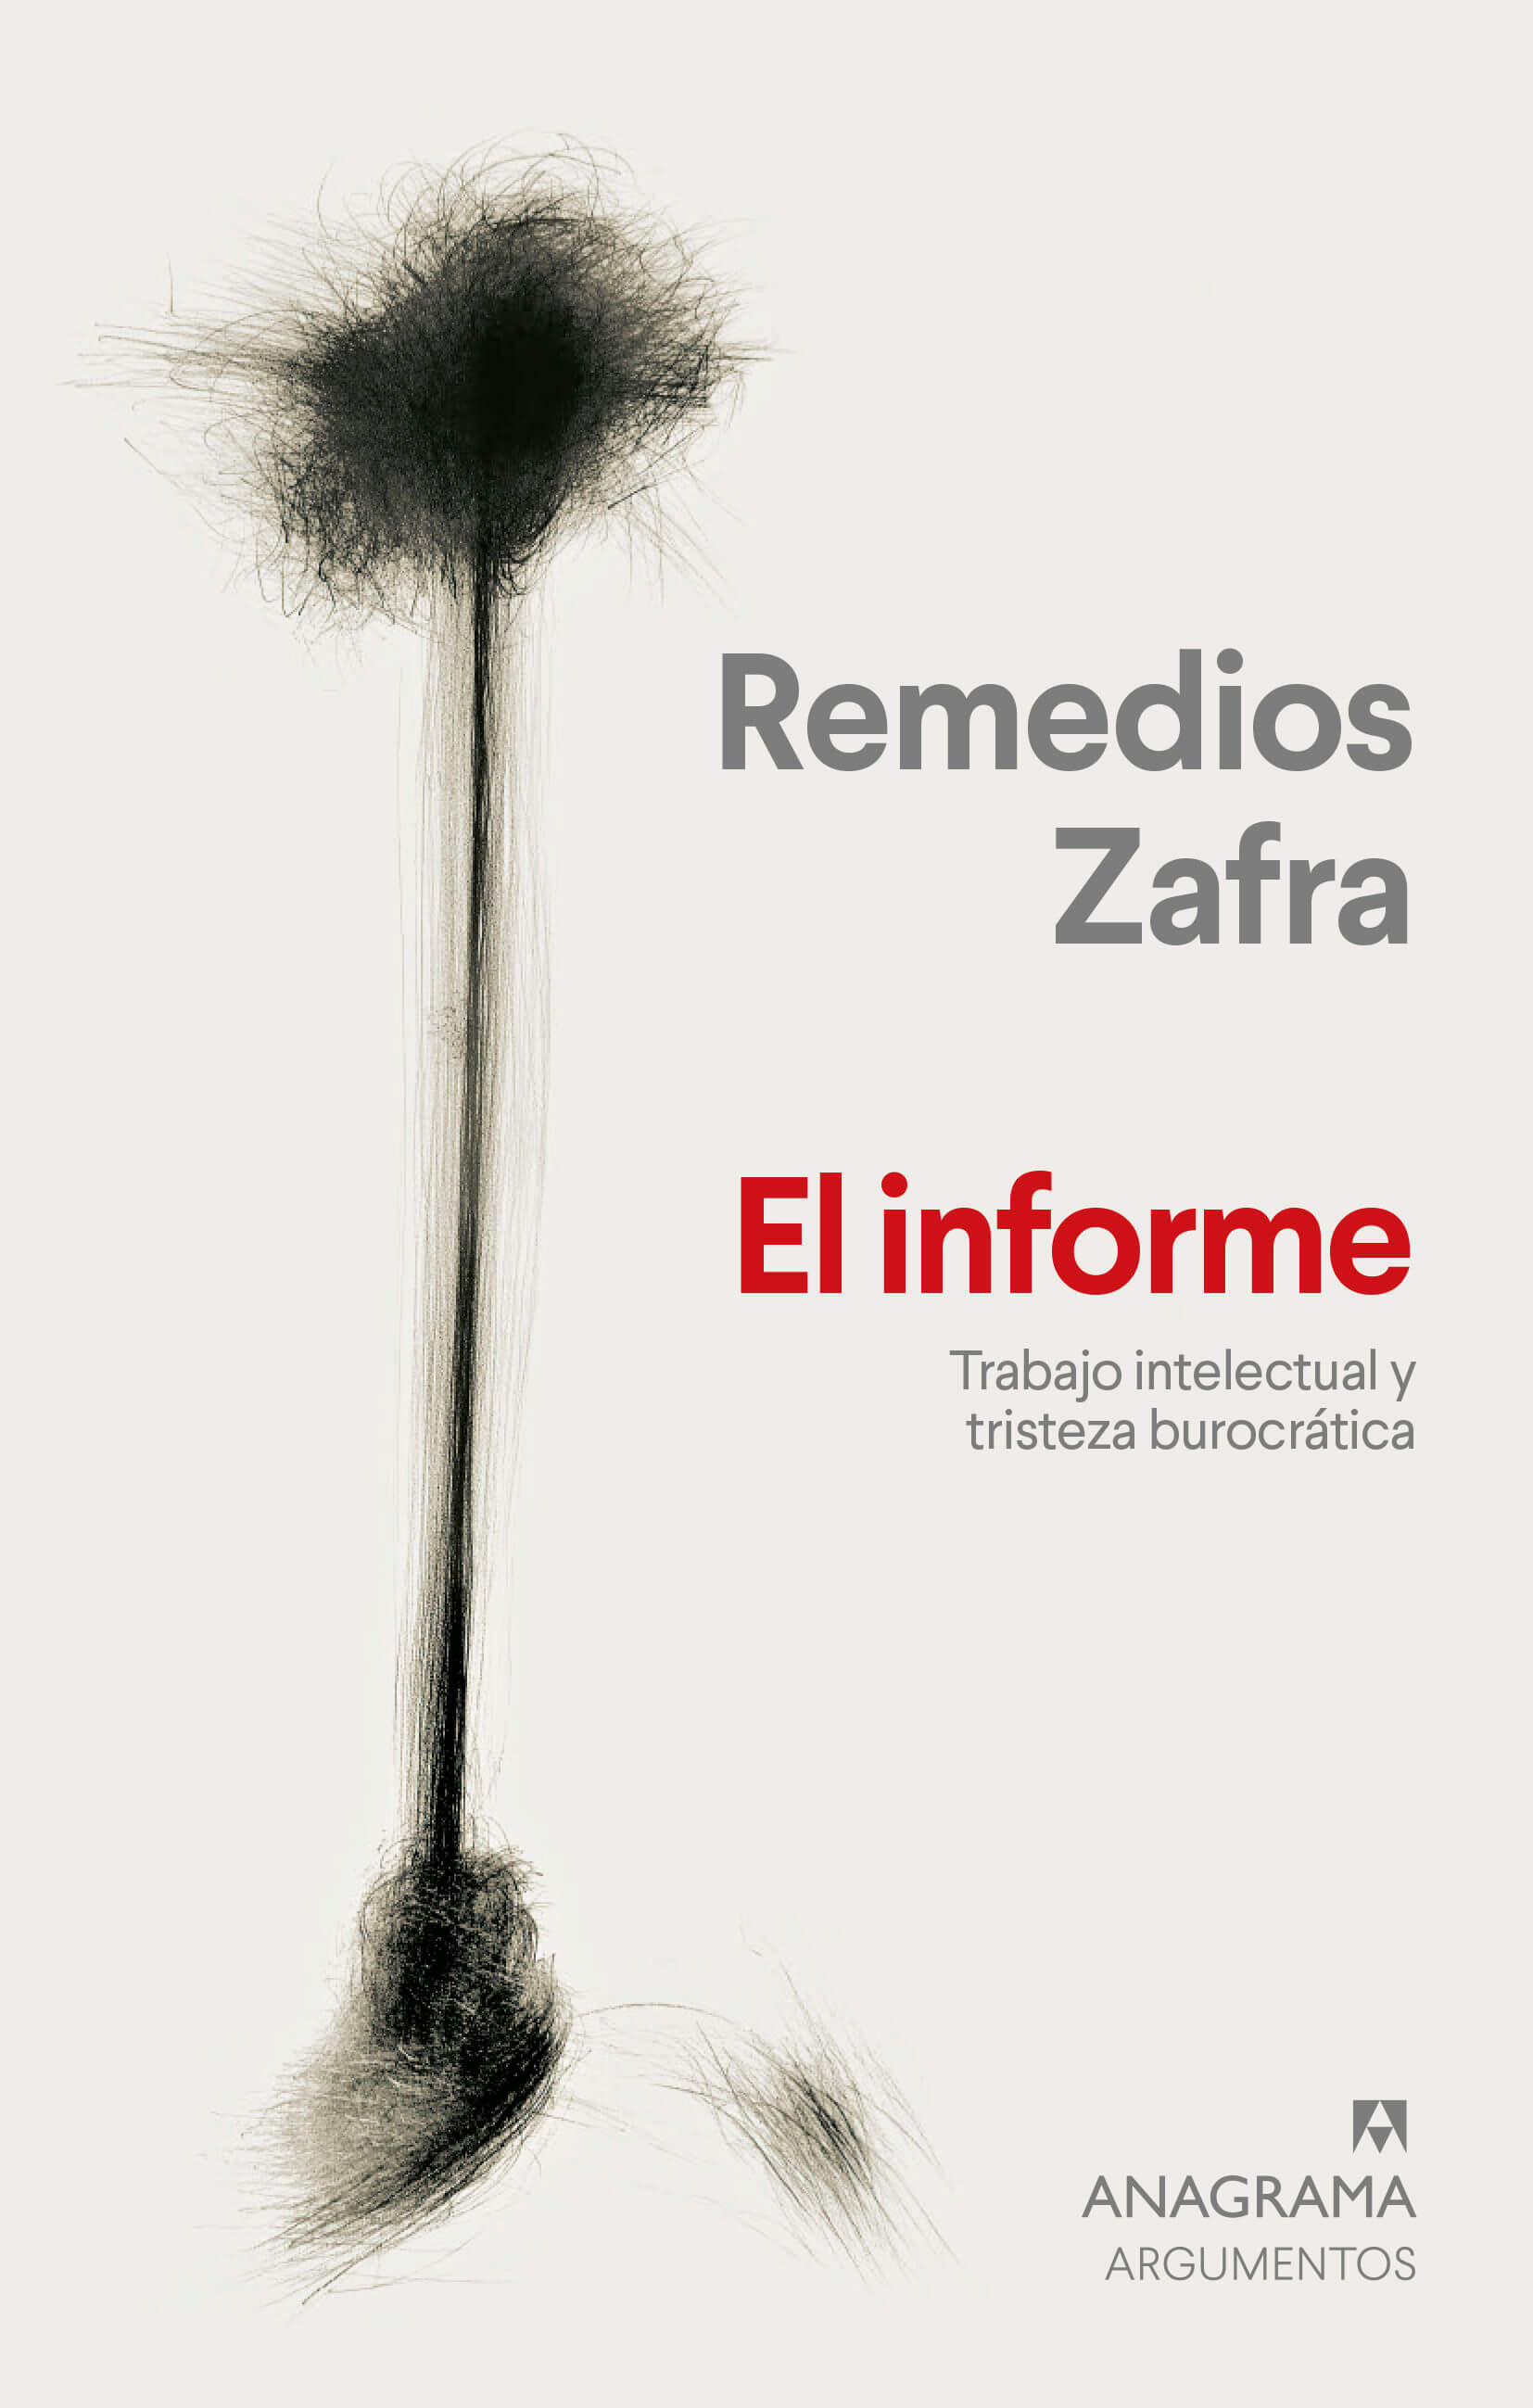 El informe, de Remedios Zafra